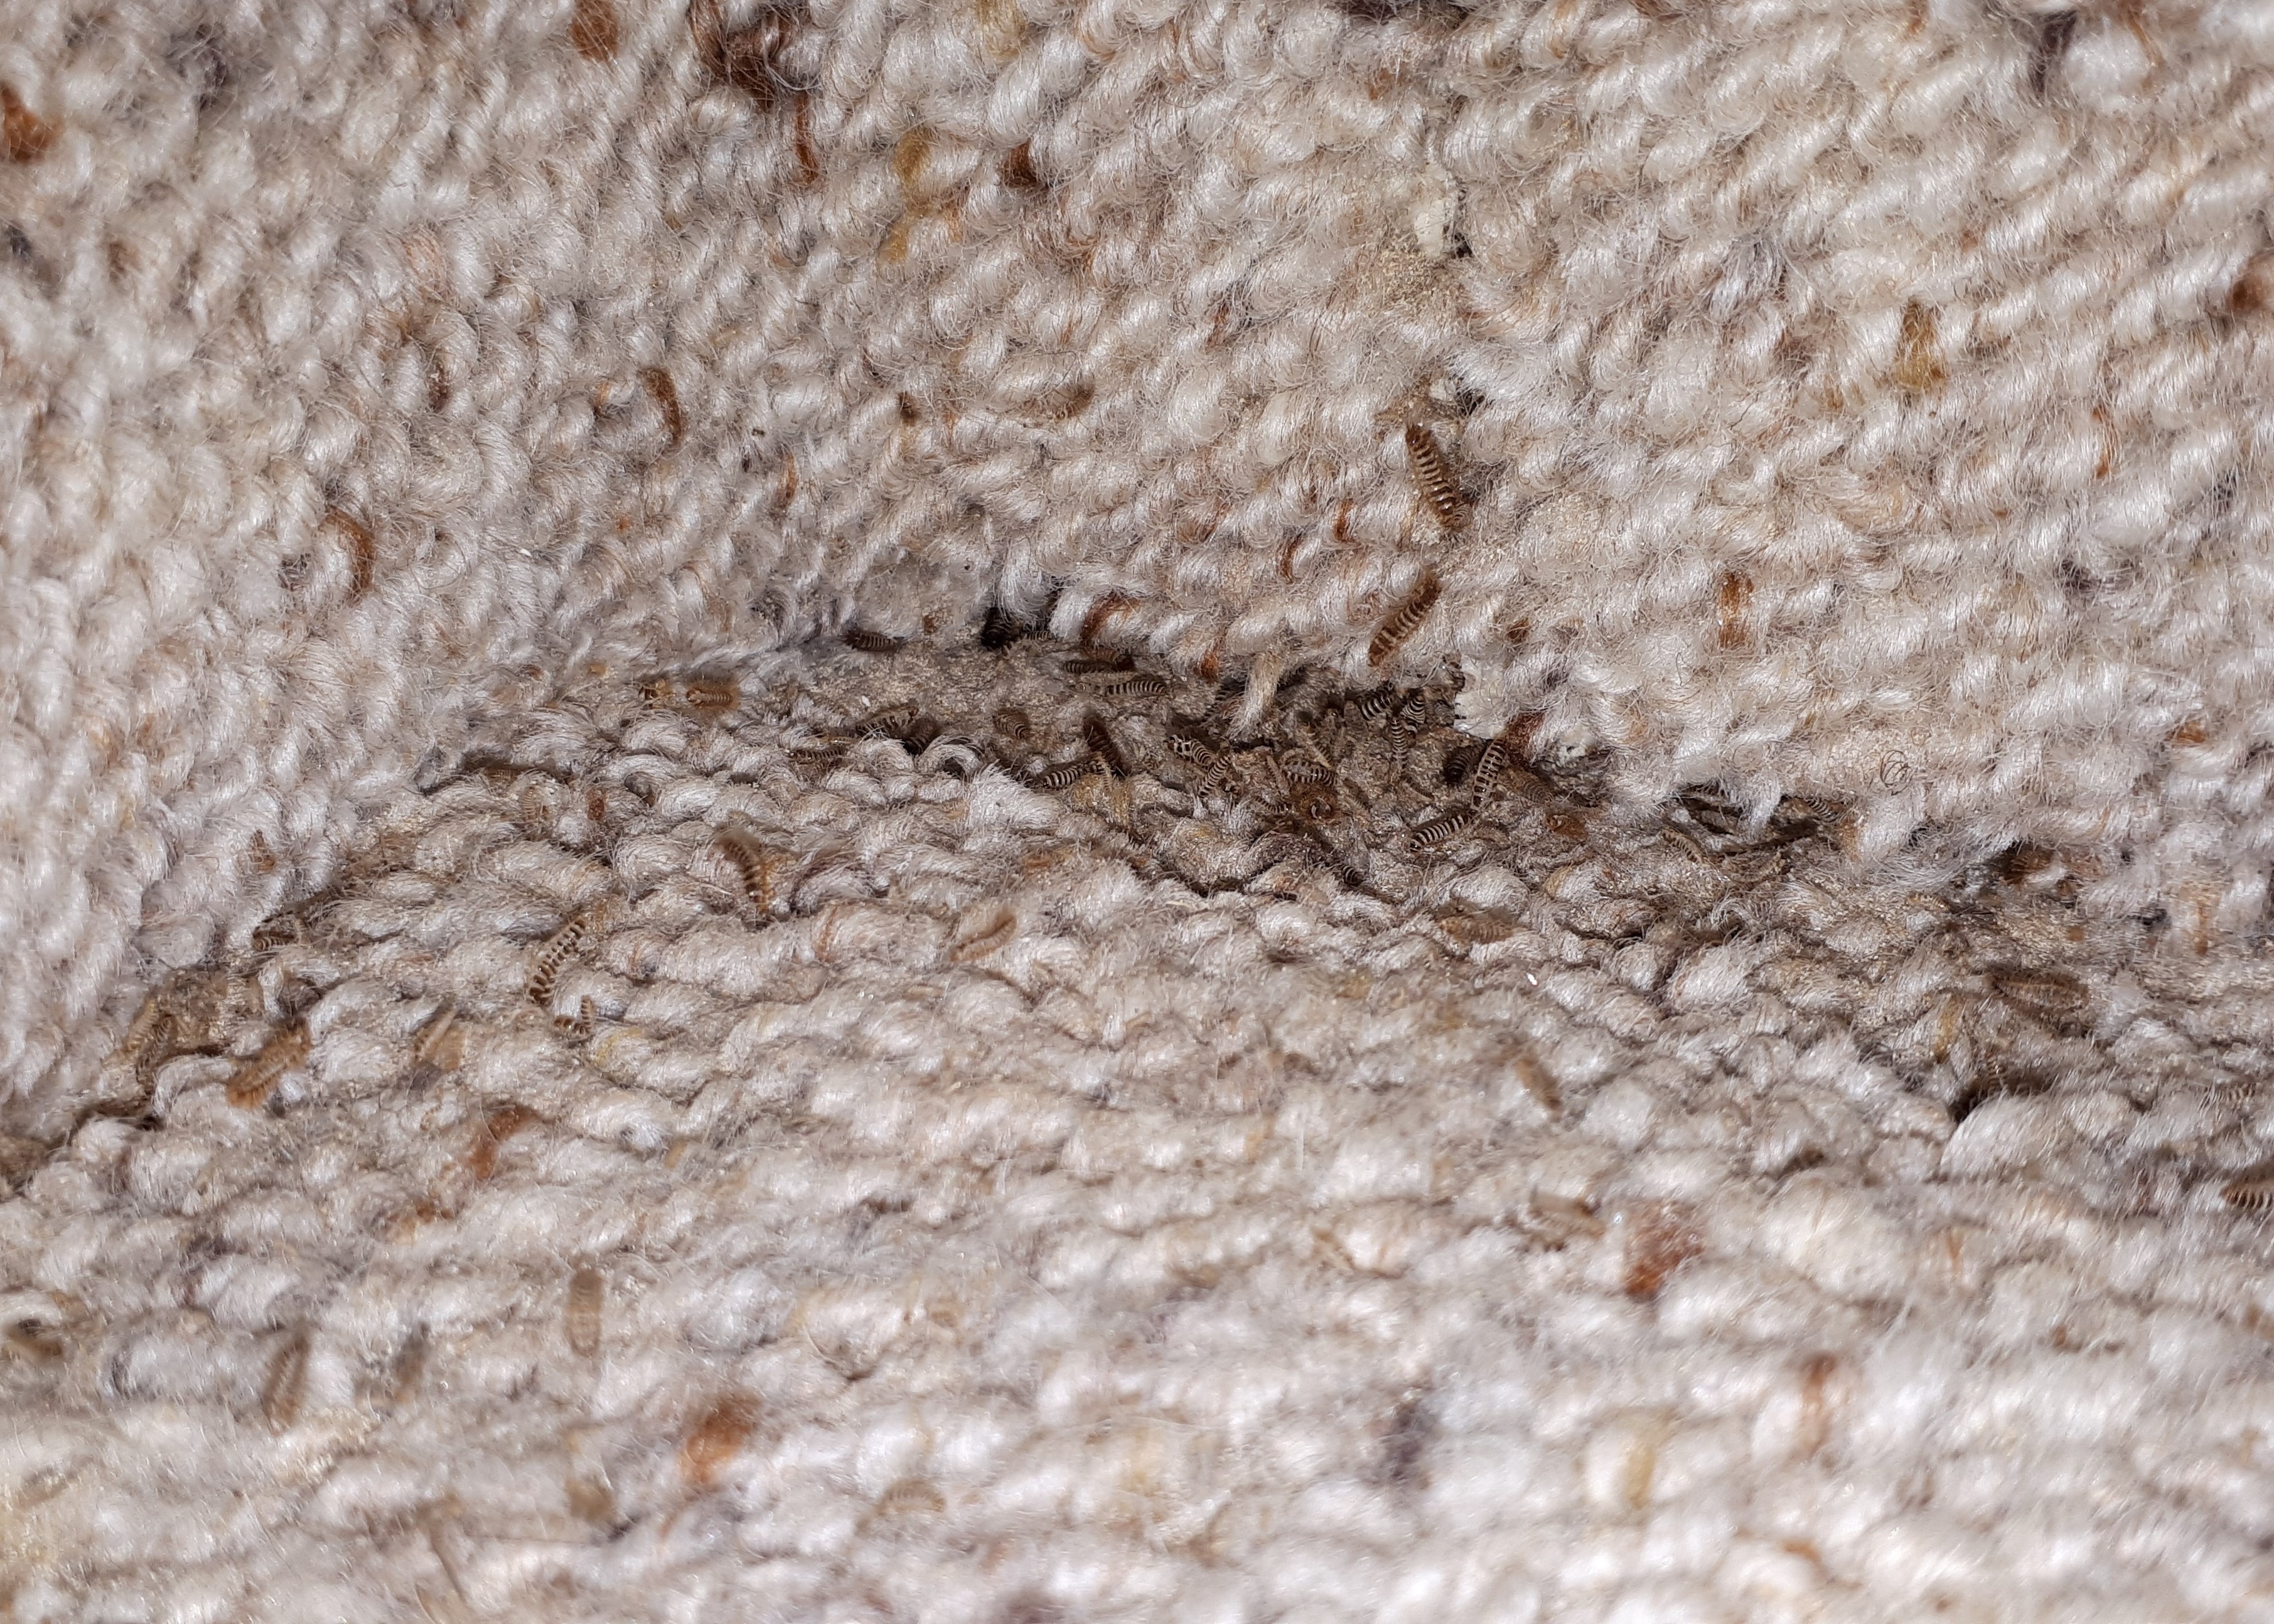 https://www.kiwicare.co.nz/assets/Uploads/Carpet-Beetle-Larvae-in-Carpet.jpg